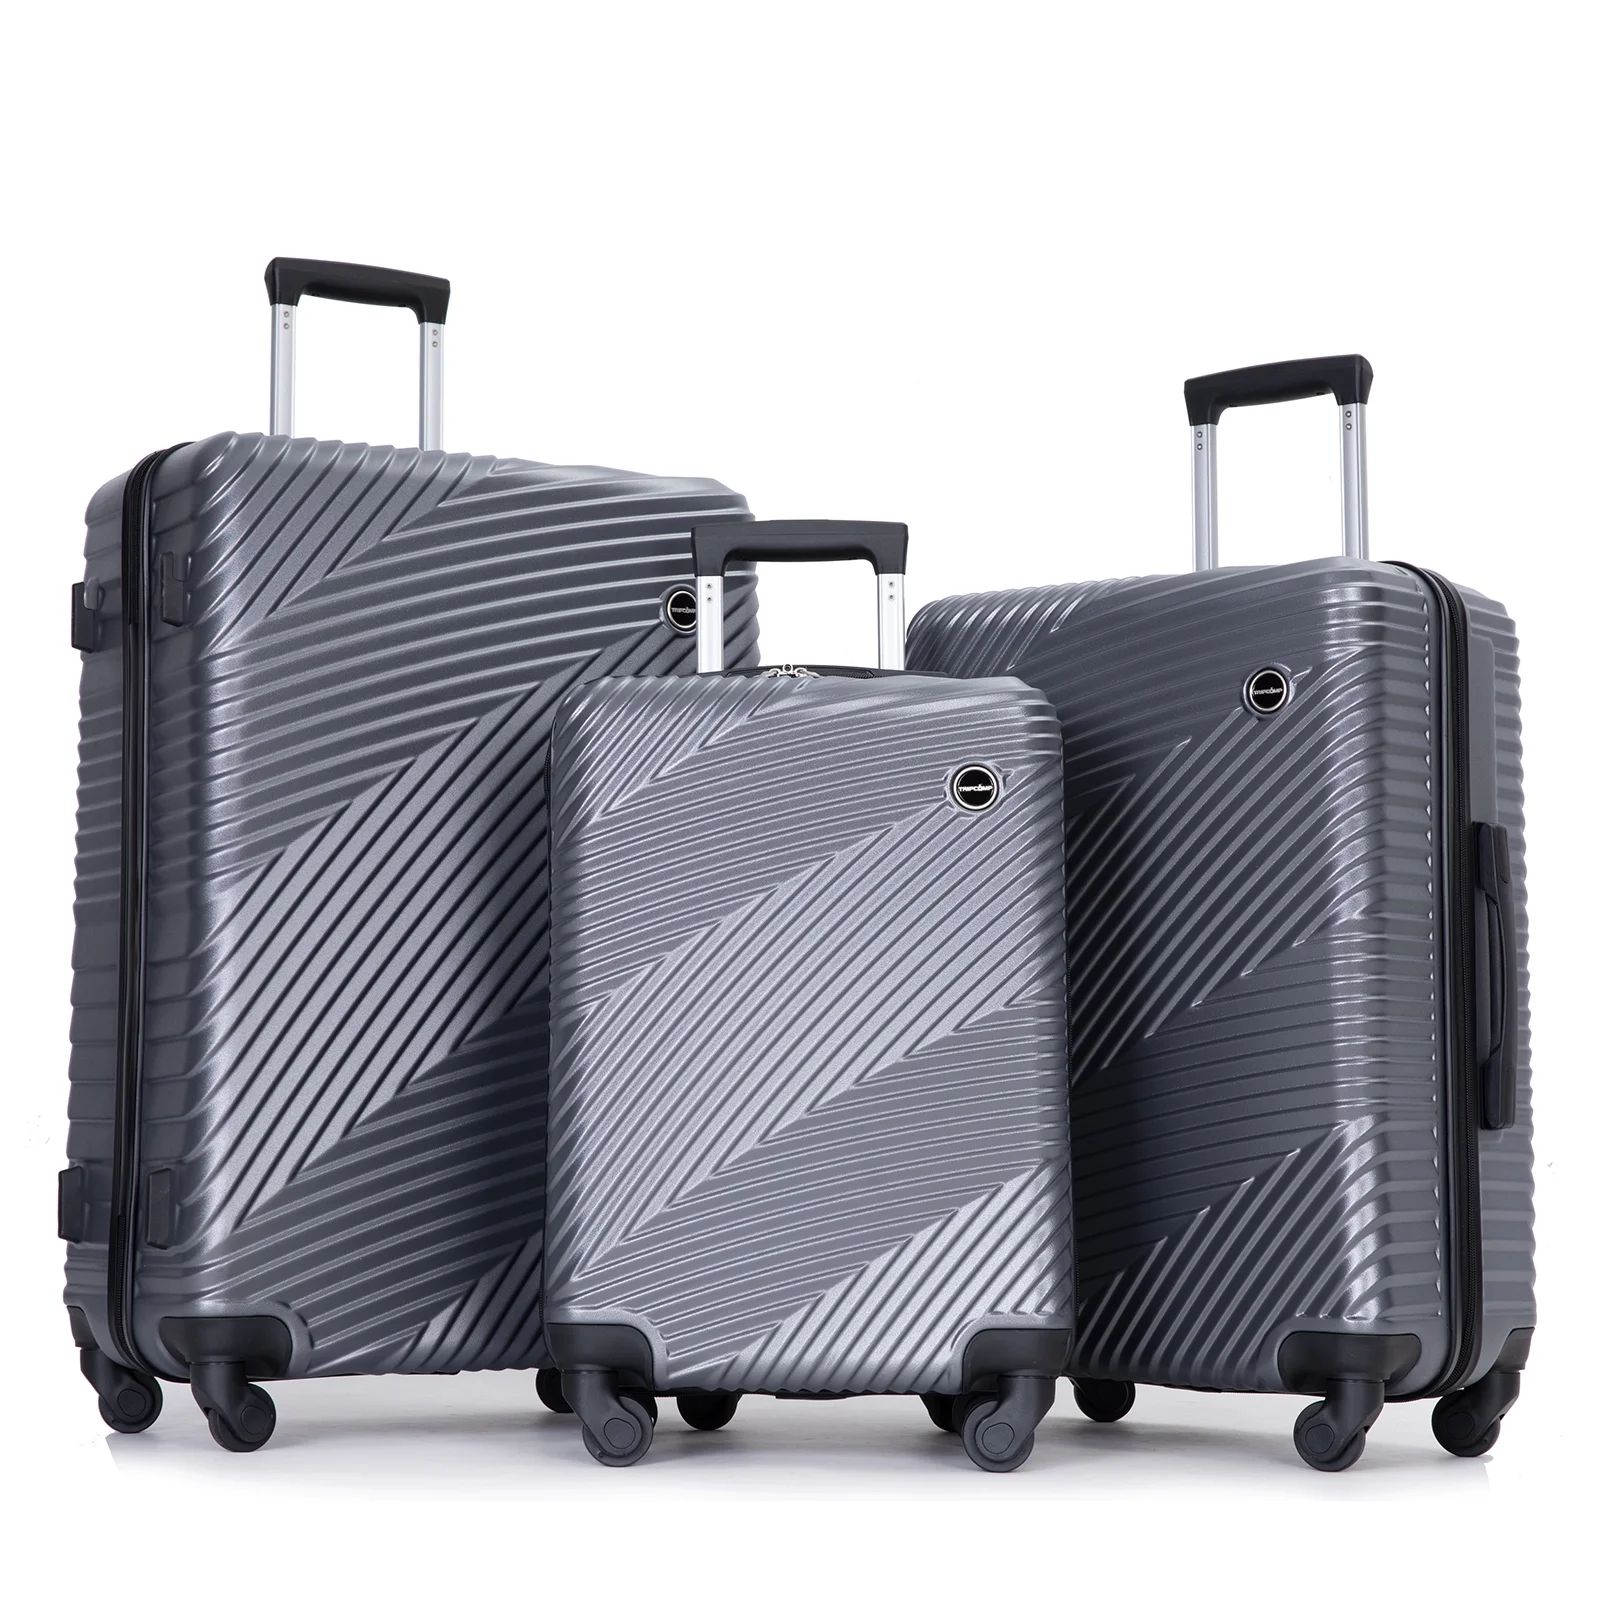 Tripcomp Luggage 3 Piece Set,Suitcase Set with Spinner Wheels Hardside Lightweight Luggage Set 20... | Walmart (US)